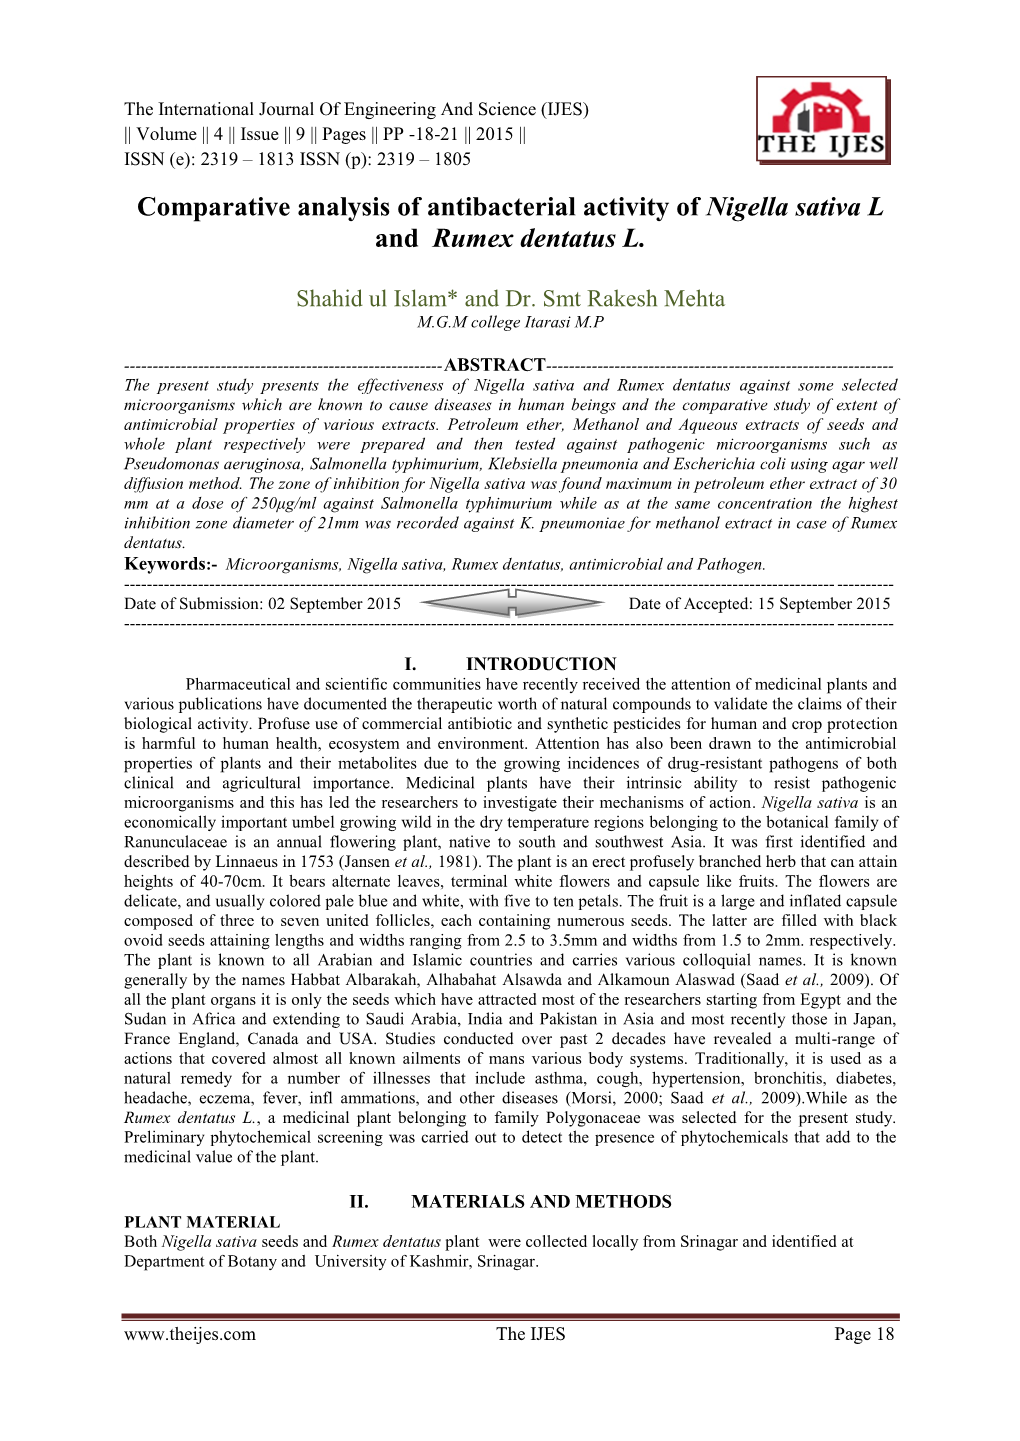 Comparative Analysis of Antibacterial Activity of Nigella Sativa L and Rumex Dentatus L